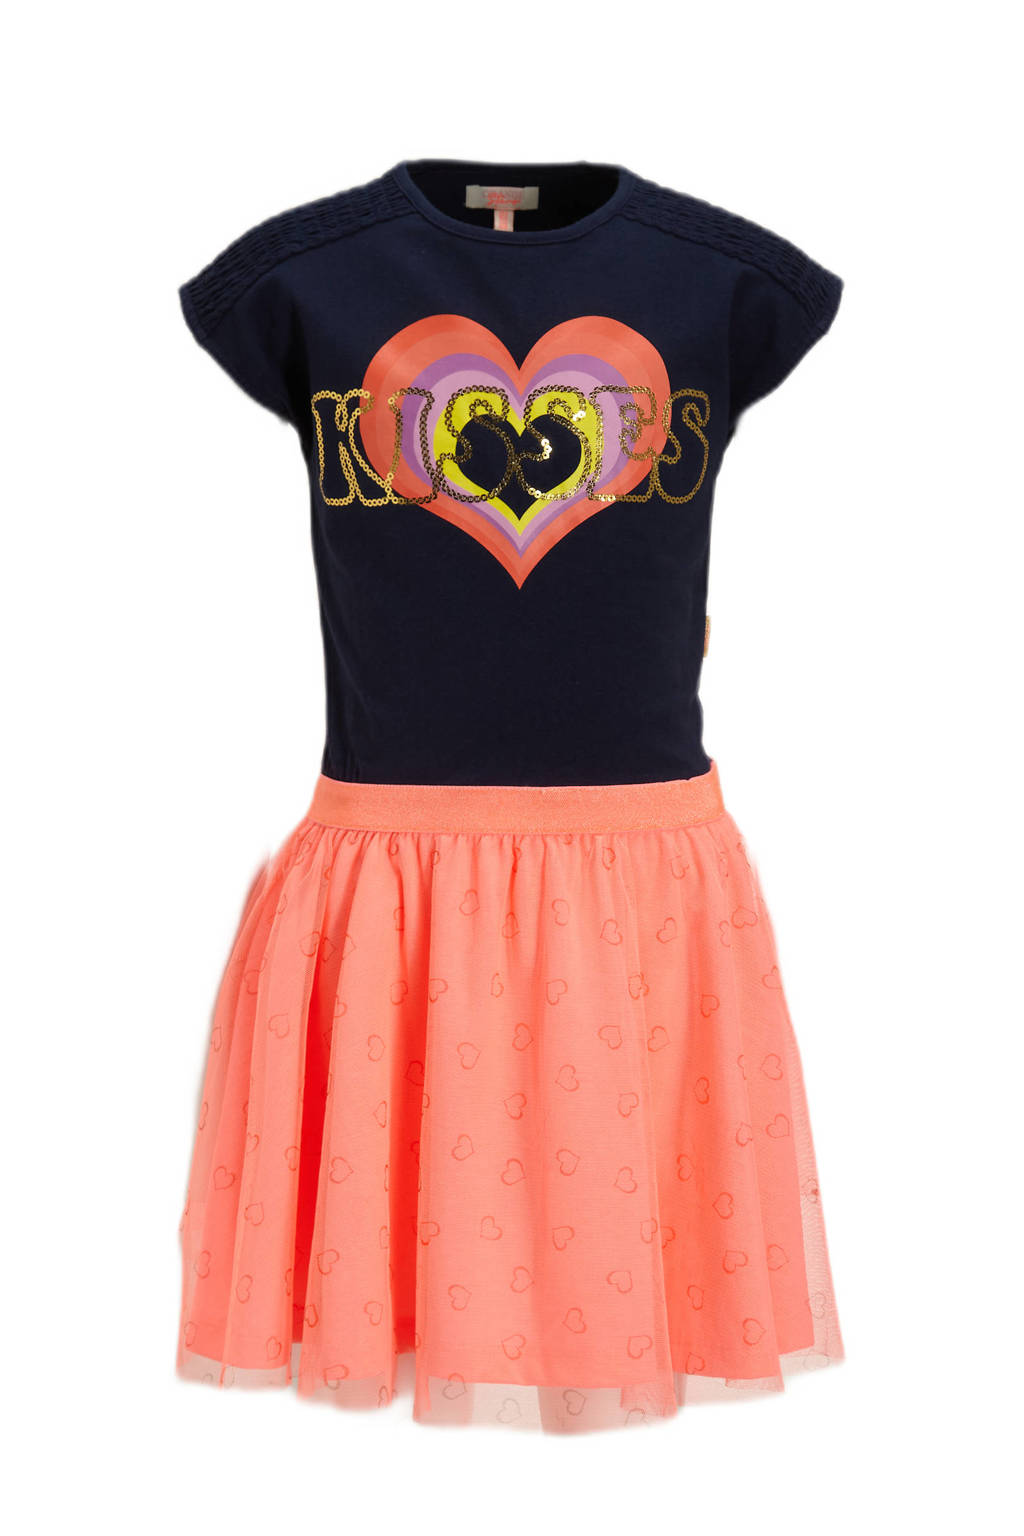 jurk Pebbles met tekstopdruk oranje/zwart